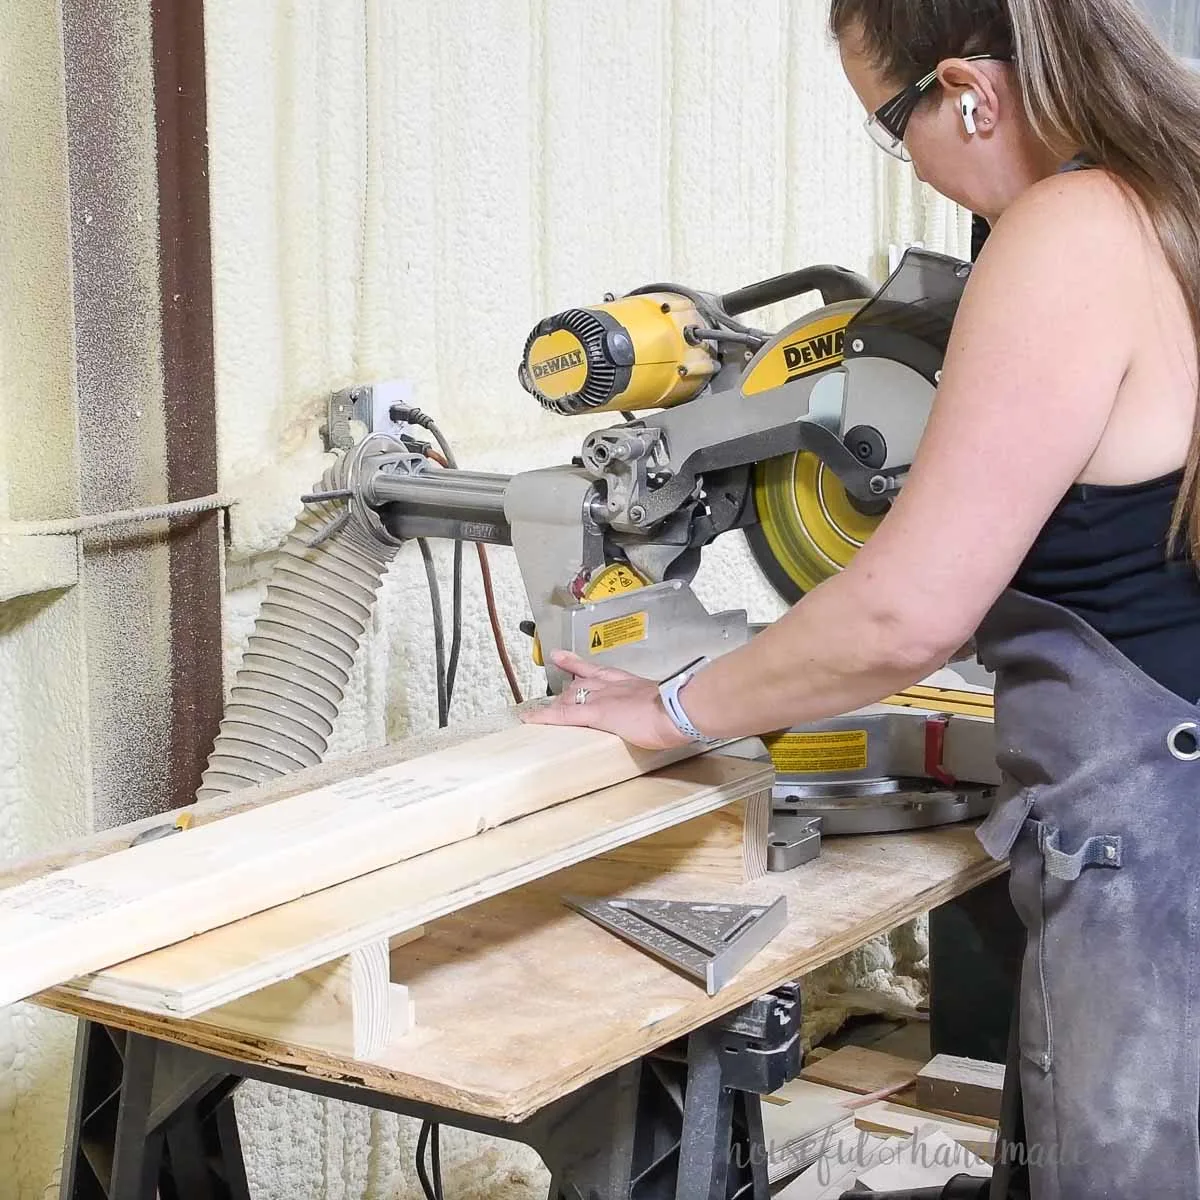 Cutting 2x4 boards on a miter saw.